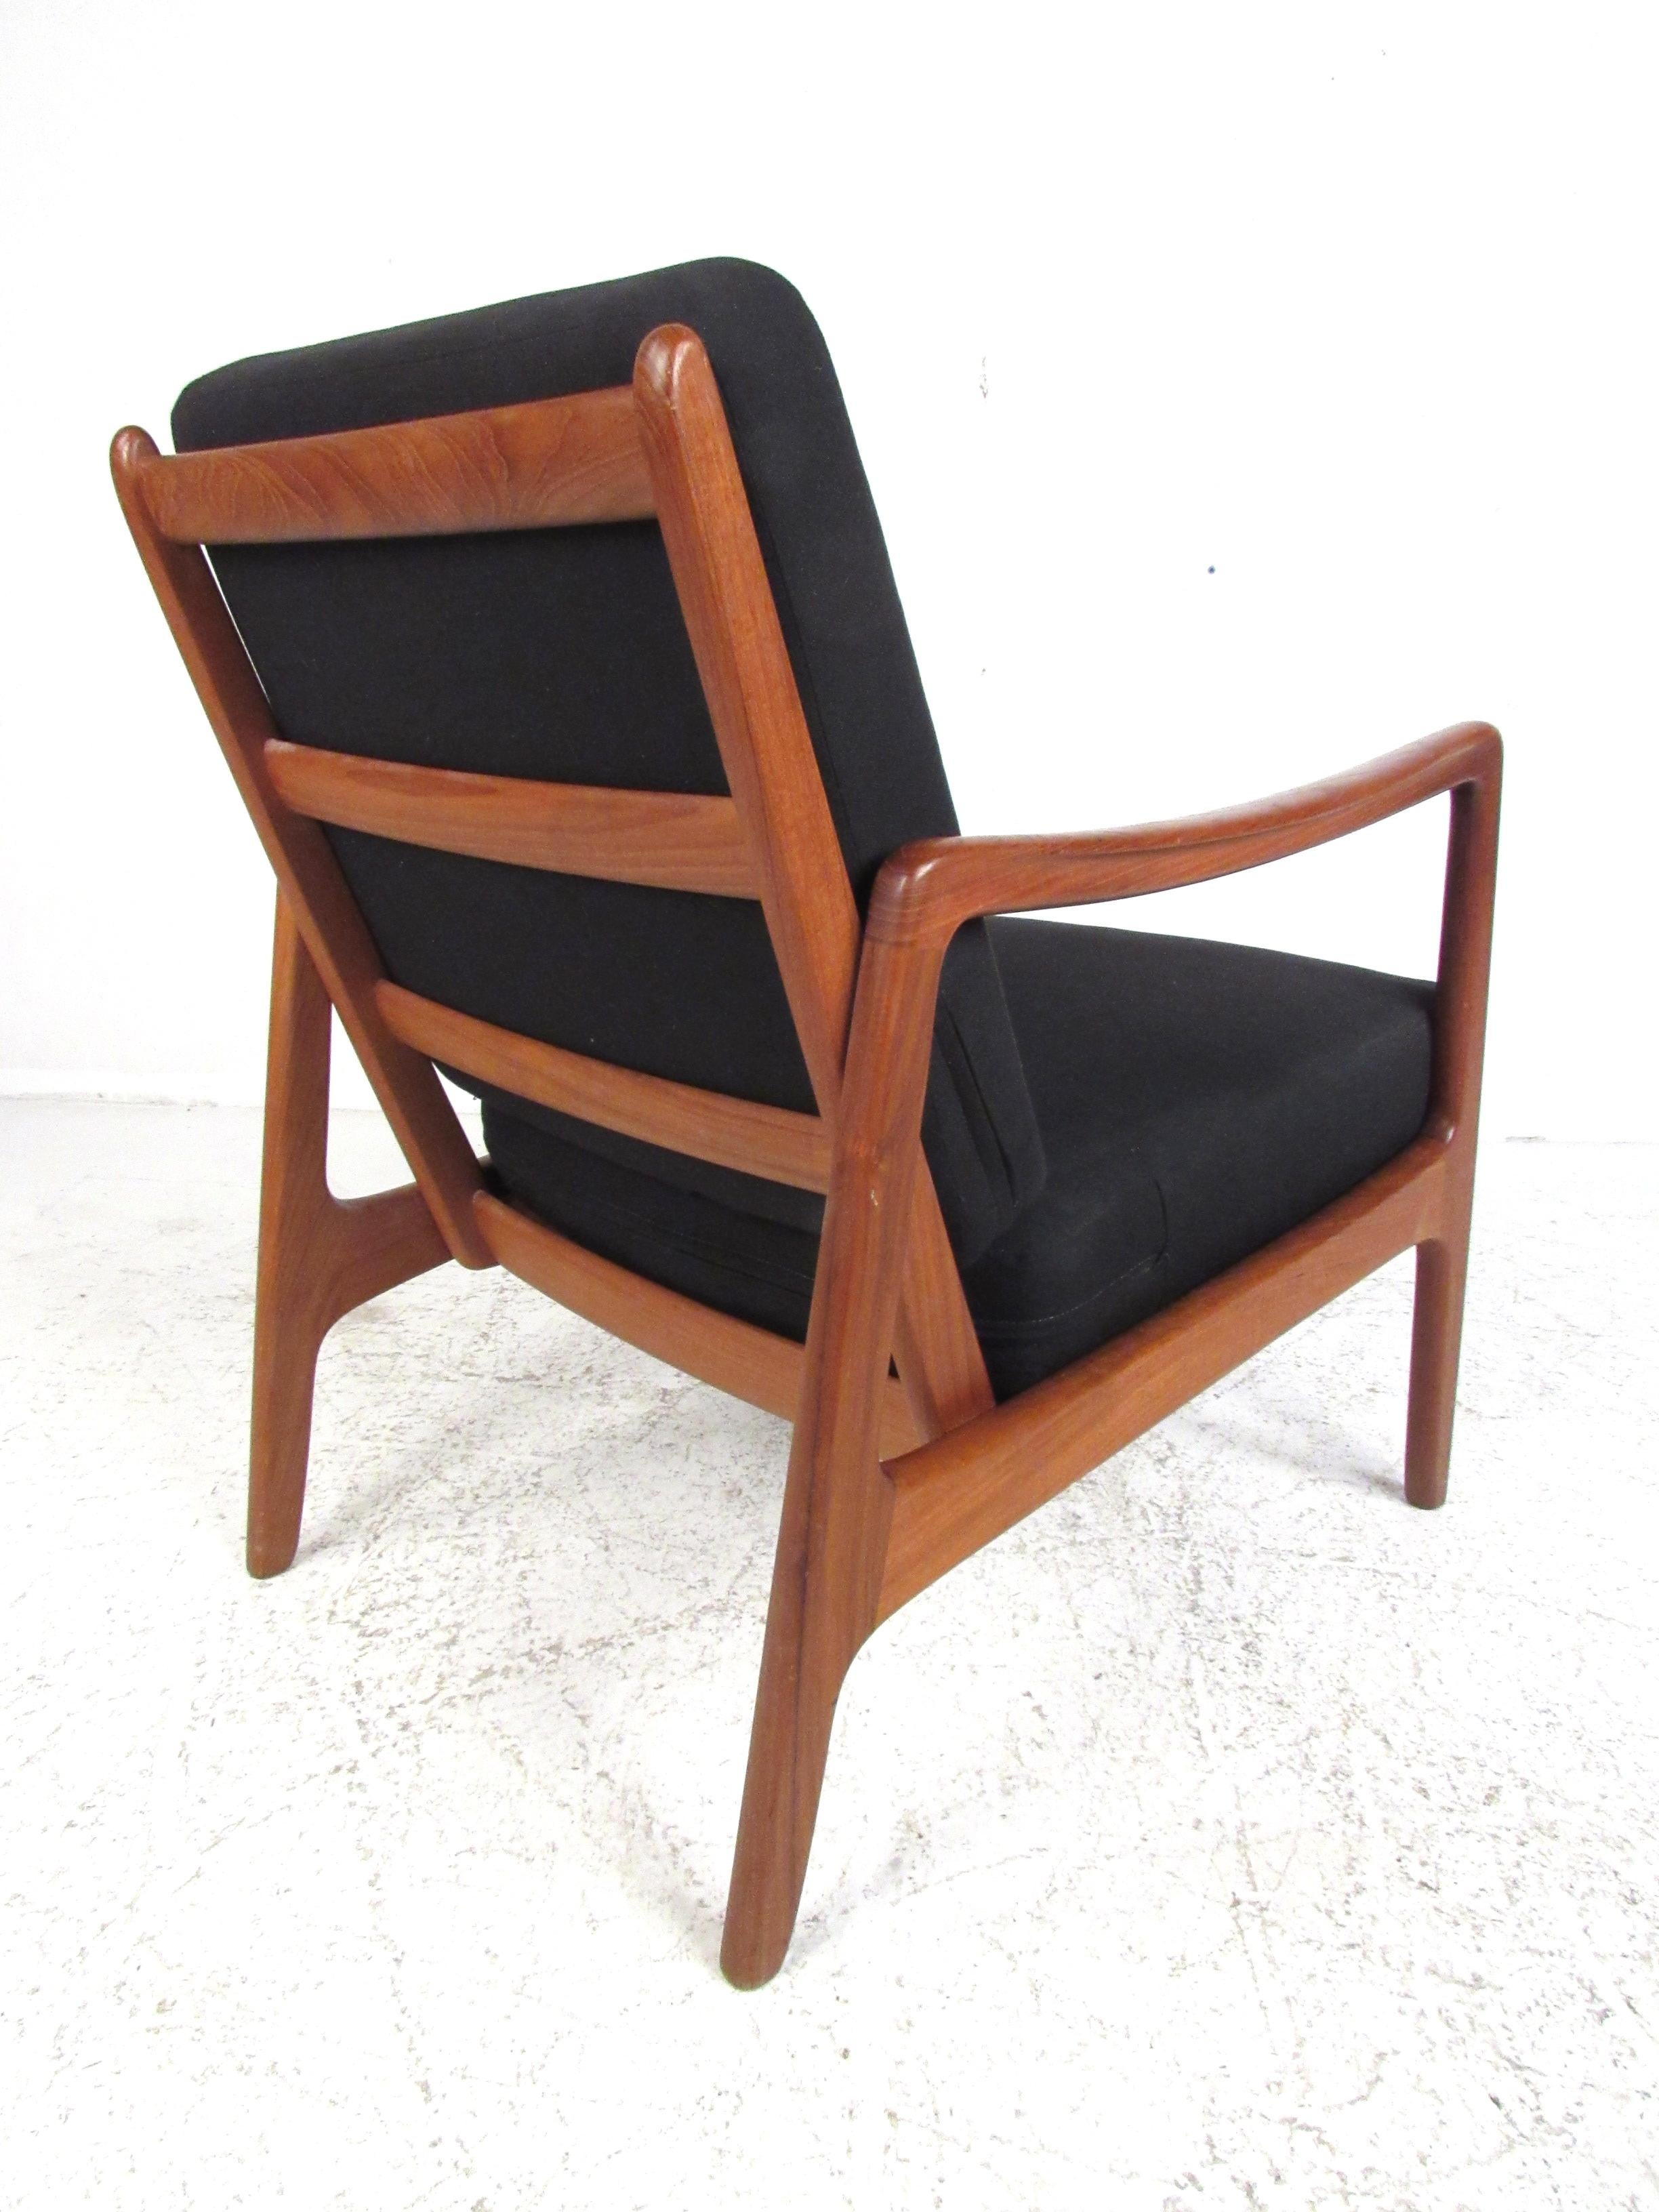 Teak Pair of John Stuart Mid-Century Modern Chairs by Ole Wanscher